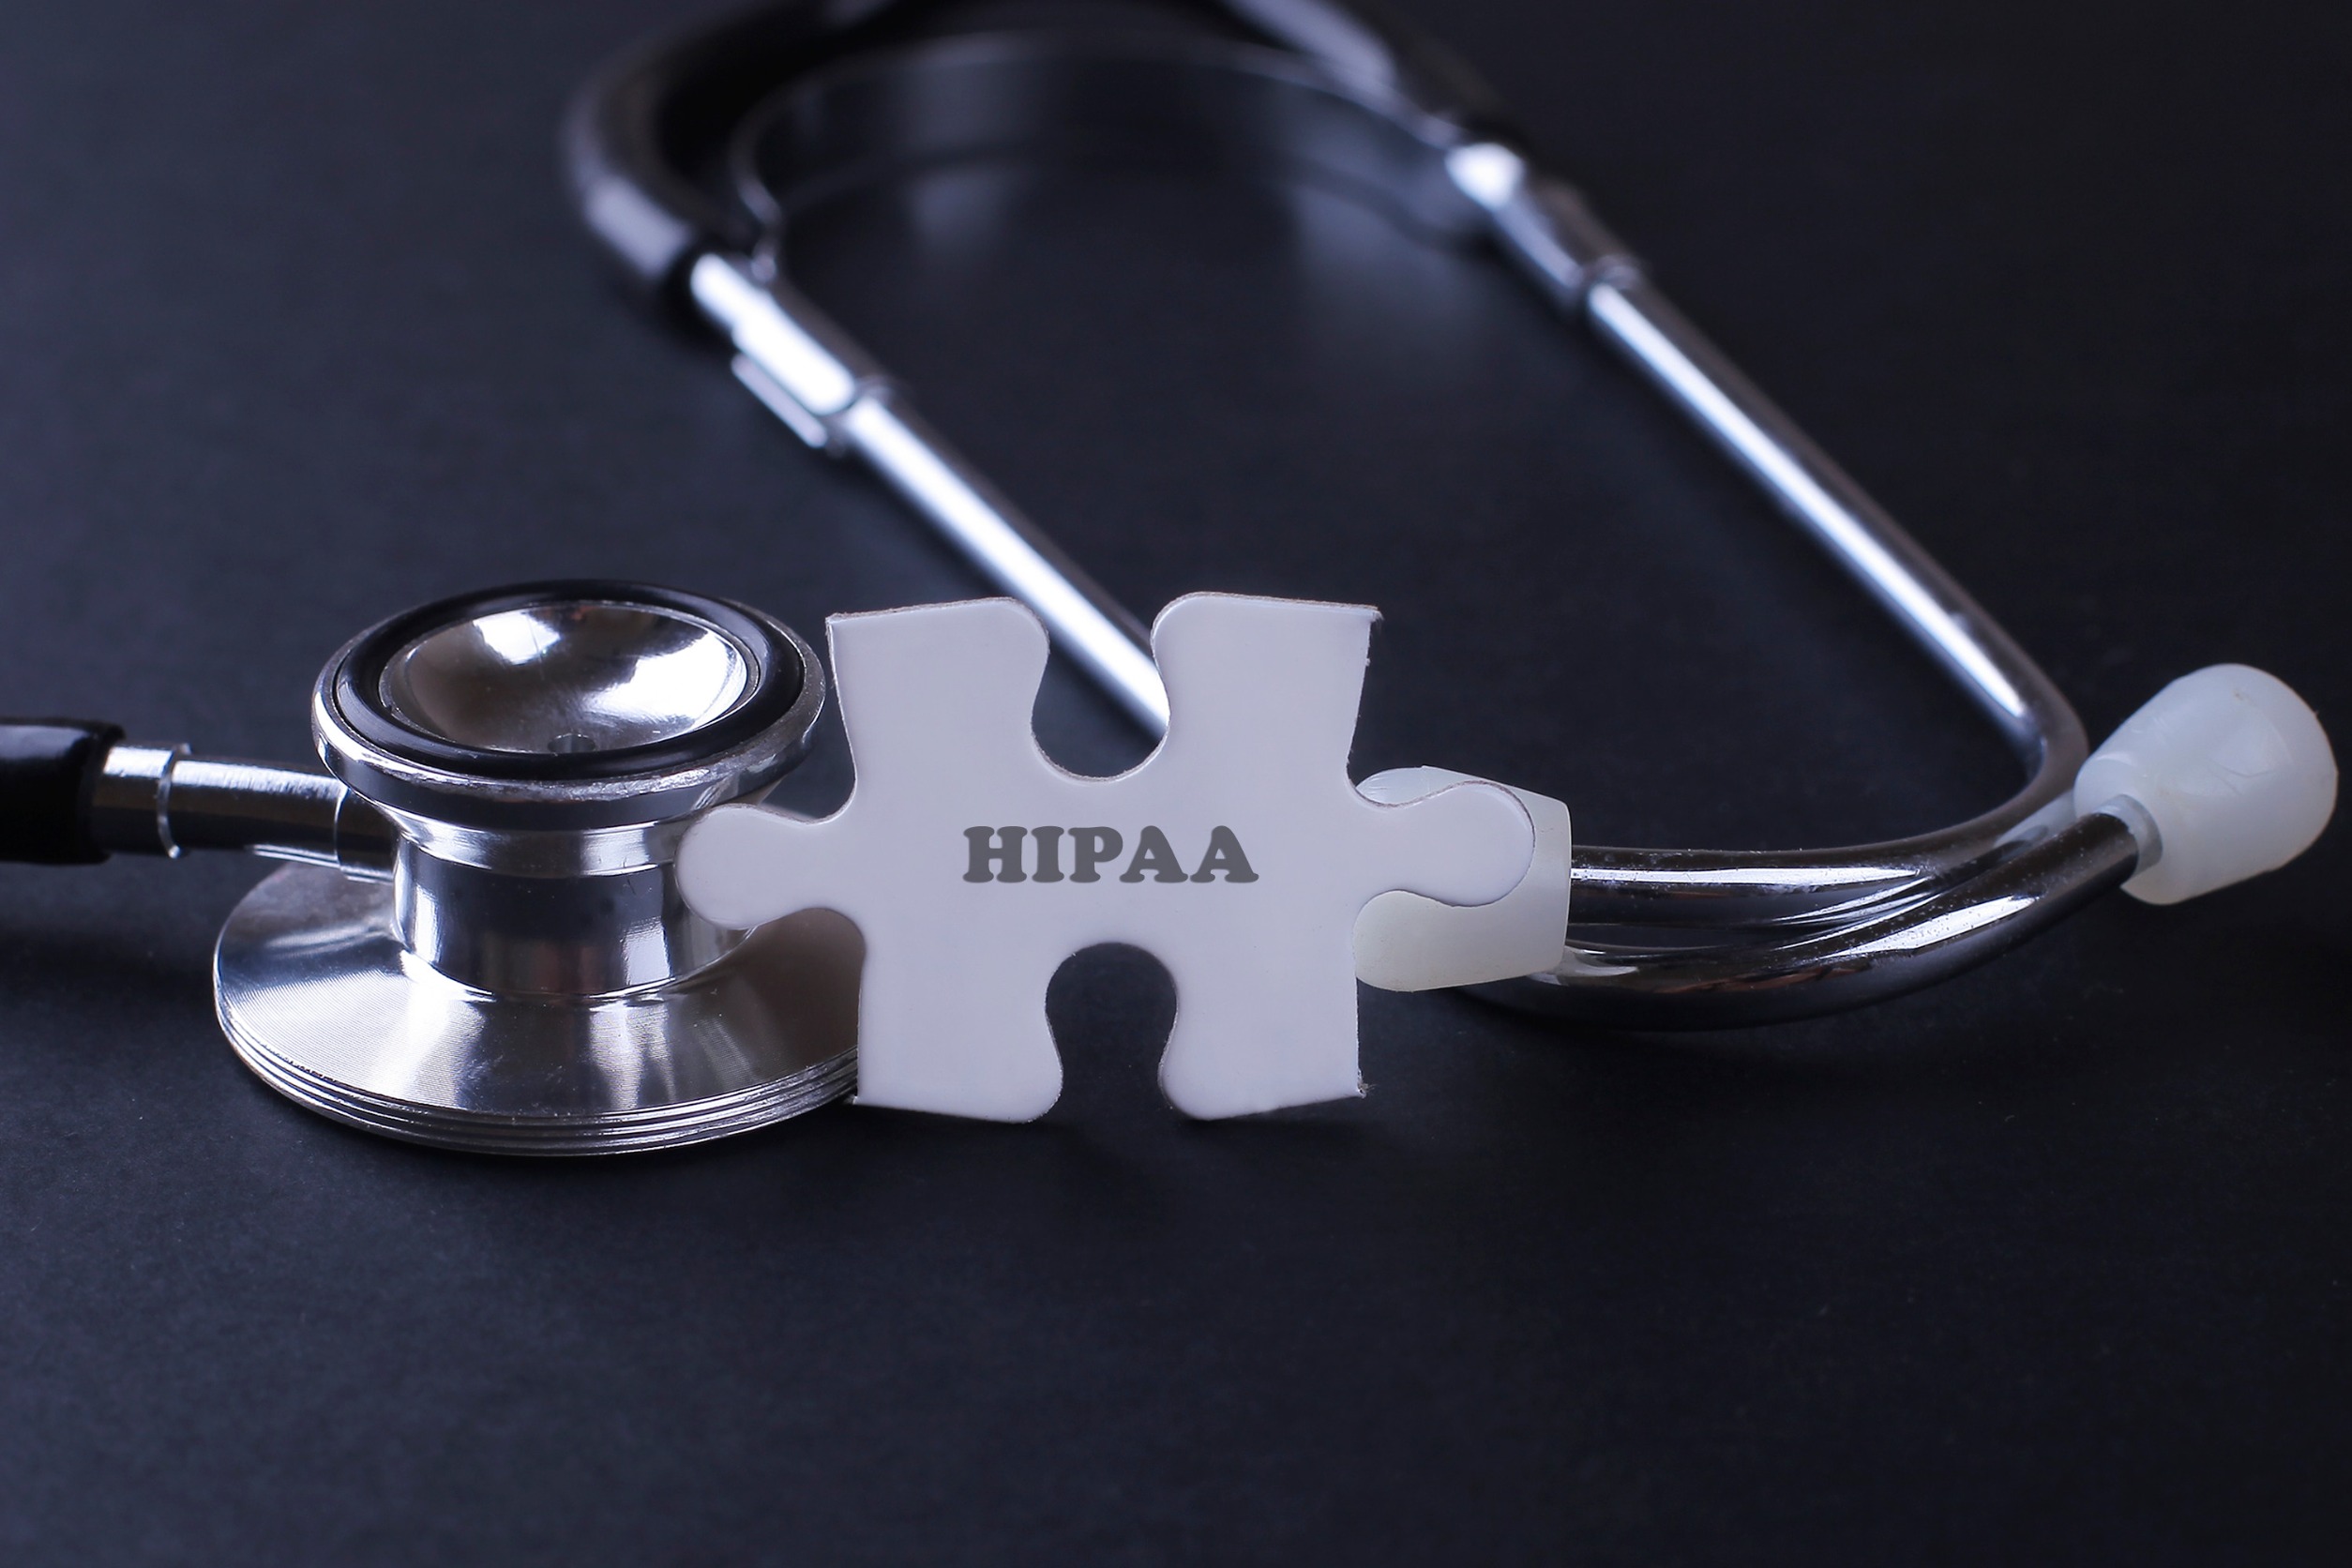 wuwta: hipaa compliant patient messaging platform stethoscope